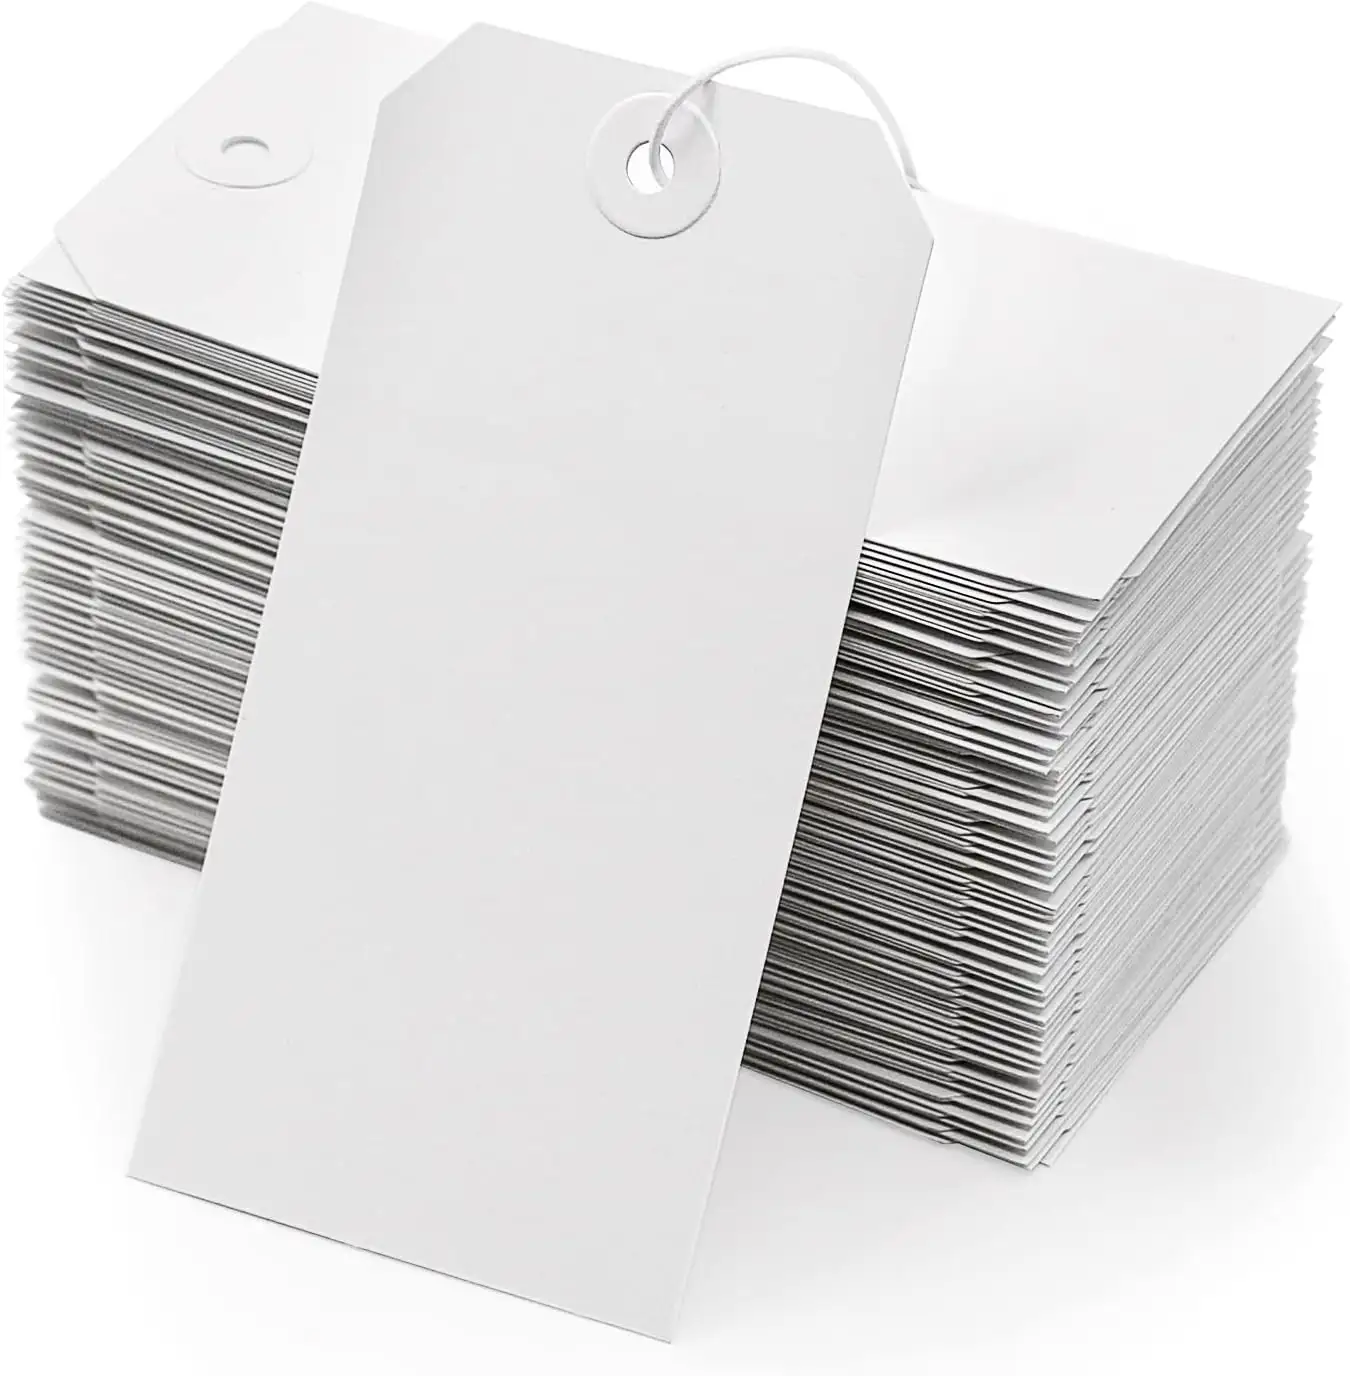 Label Label daur ulang dengan kotak kawat 100 Label kosong dengan lubang penguat dan ikatan kawat logam, Label dengan kawat